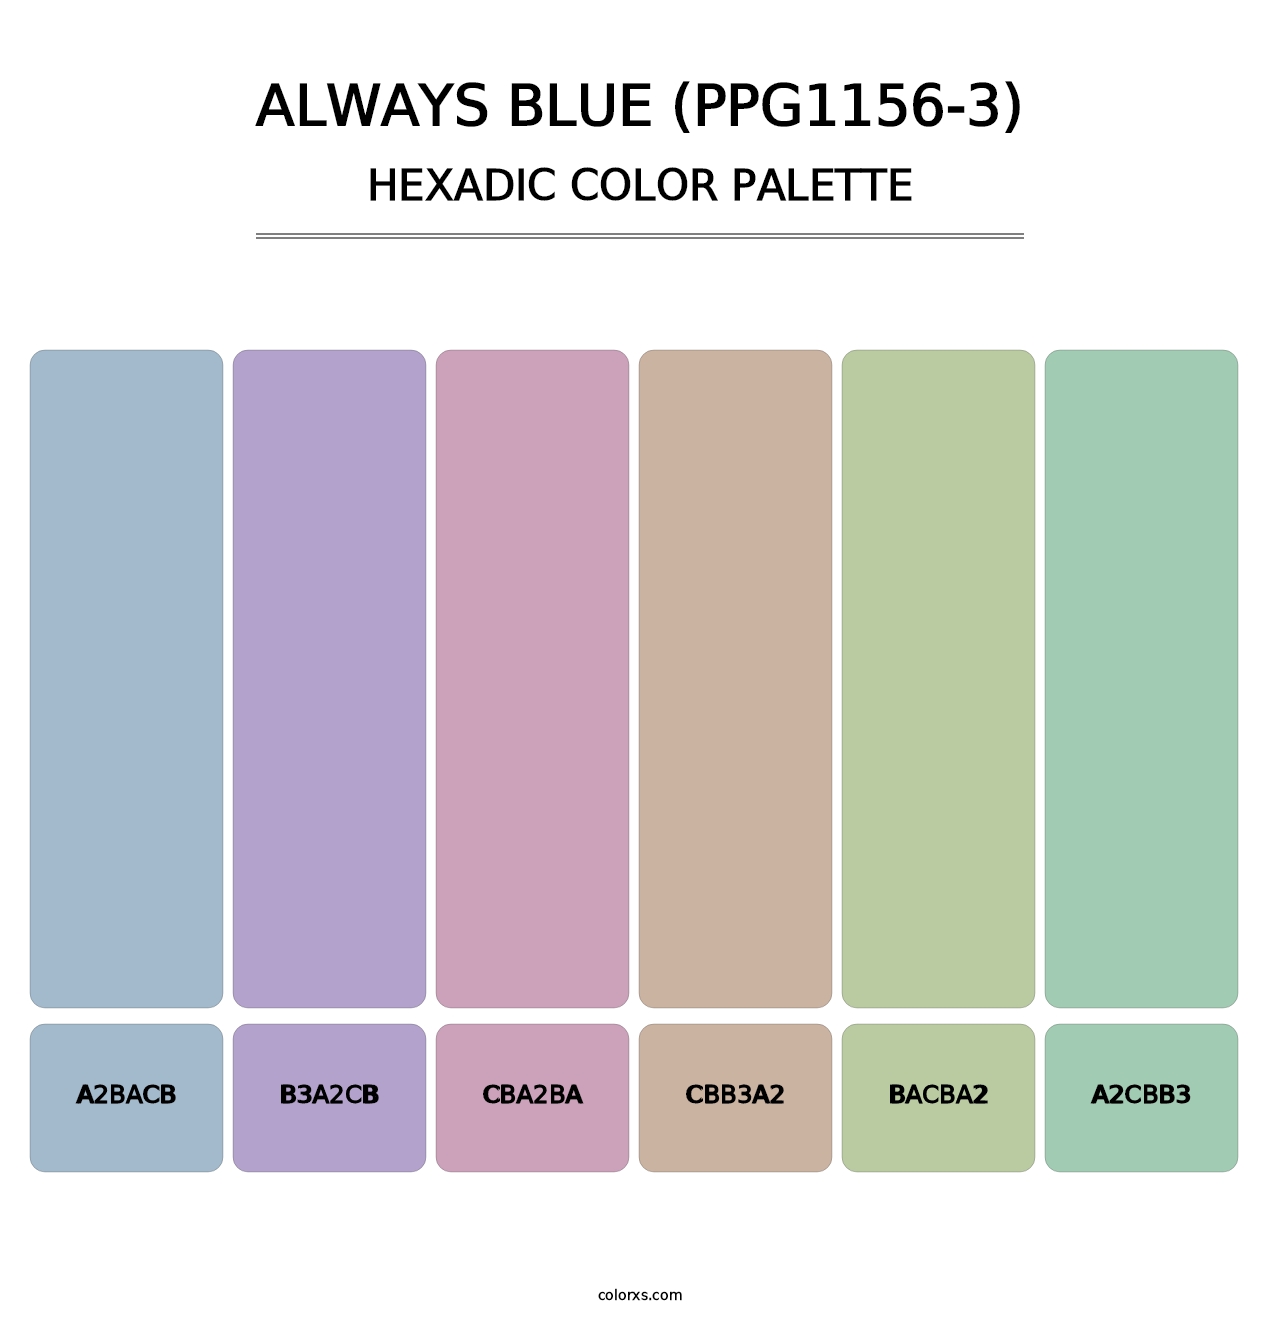 Always Blue (PPG1156-3) - Hexadic Color Palette